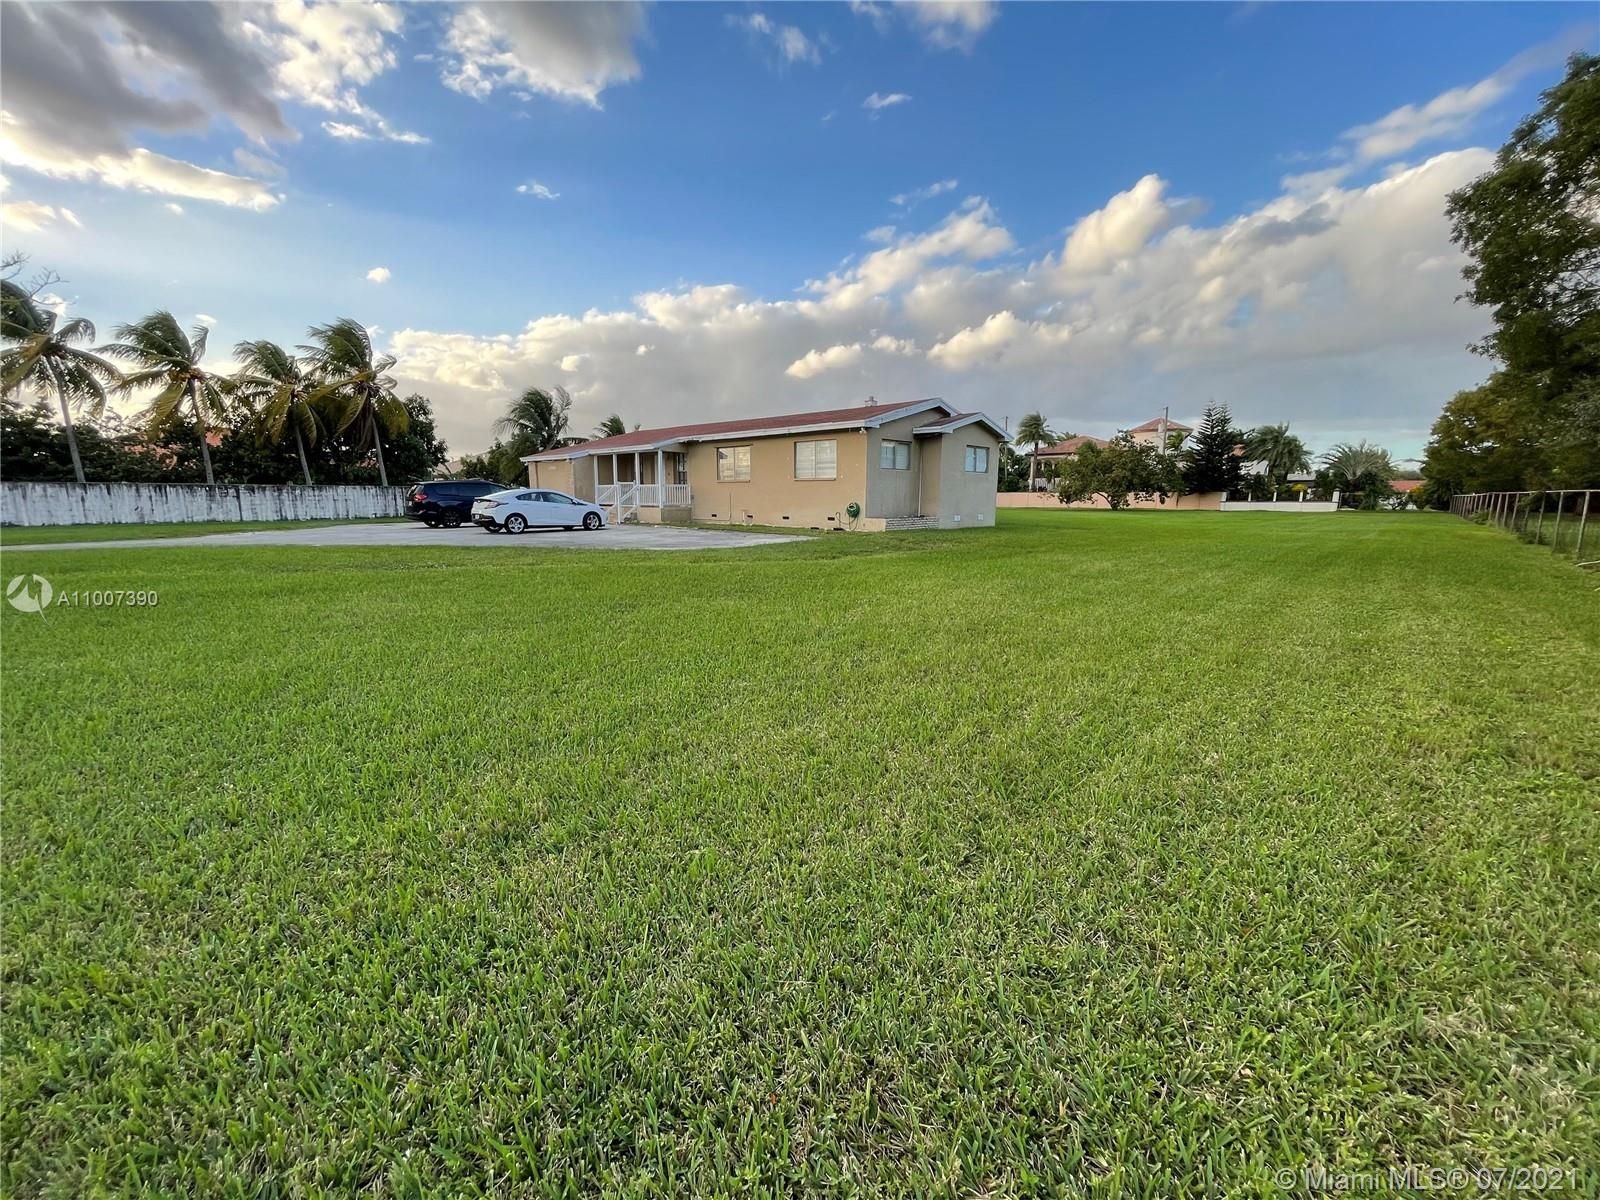 Real estate property located at 10965 28th St, Miami-Dade County, Miami, FL